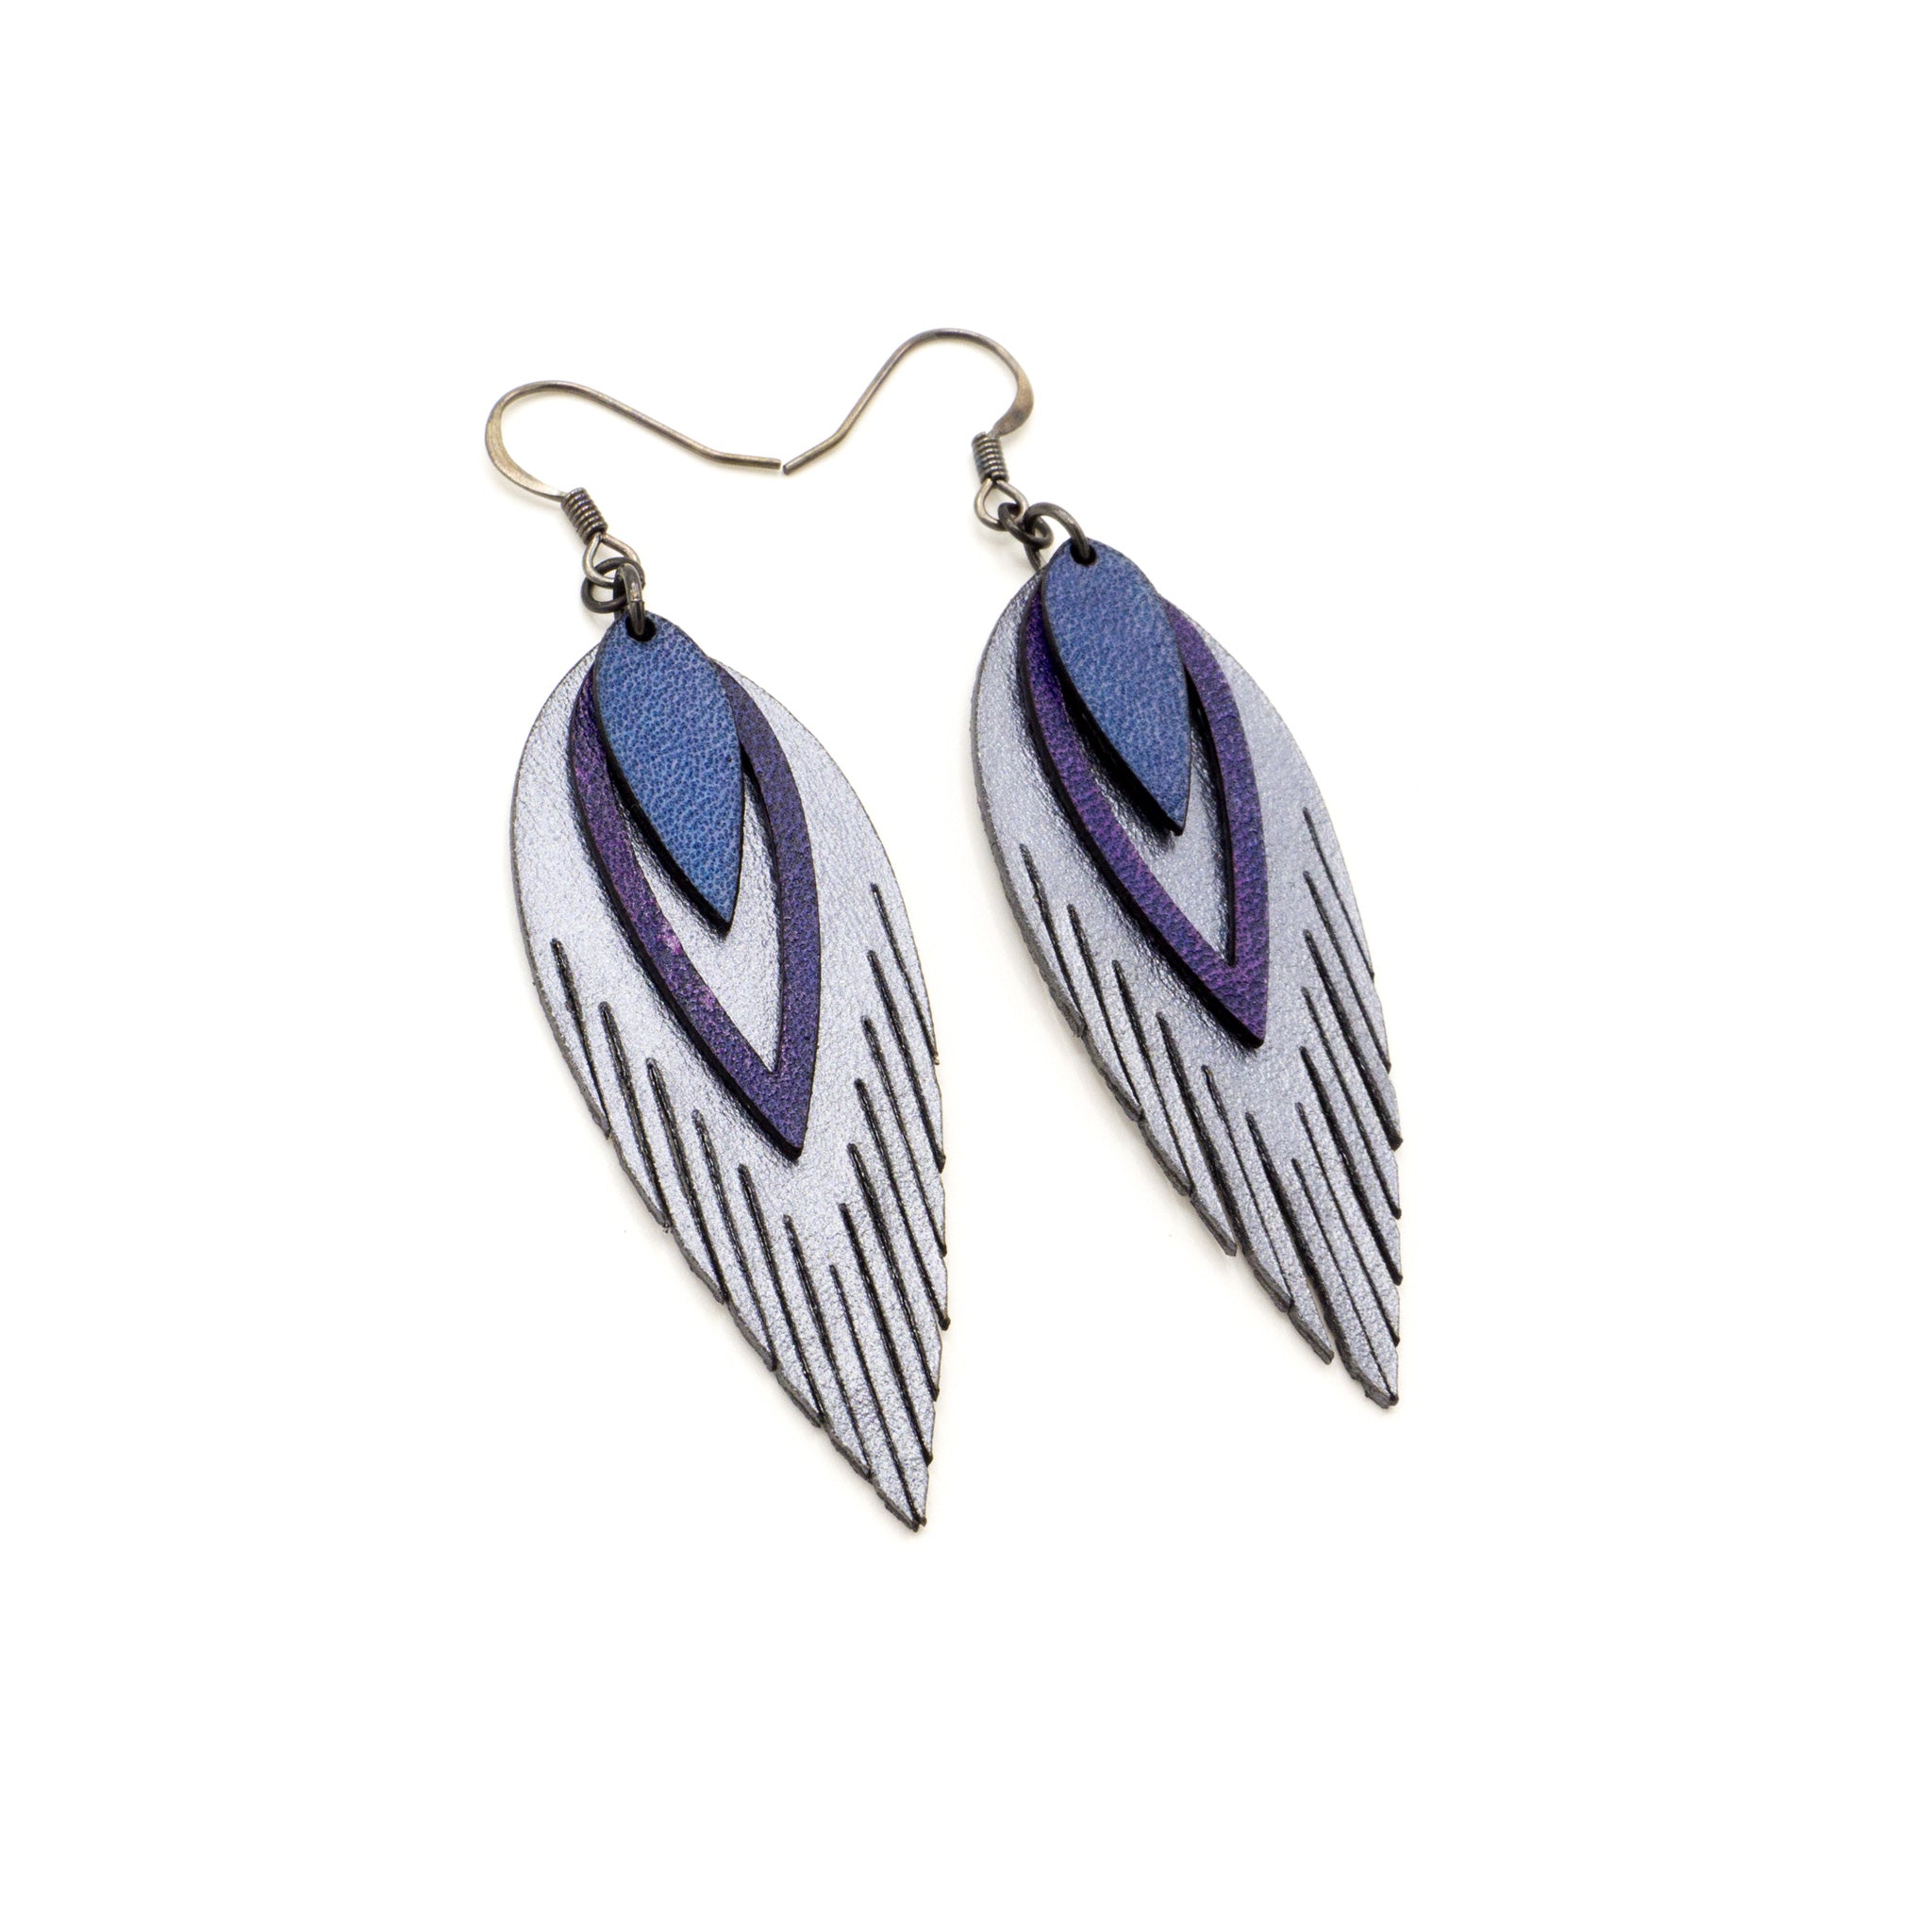 EVURU Vintage Carving Leaf Earrings Metal Silver Color Blossom Inlaid  Purple Stones Dangle Earrings for Women Gift 1Pair (Color : 002)